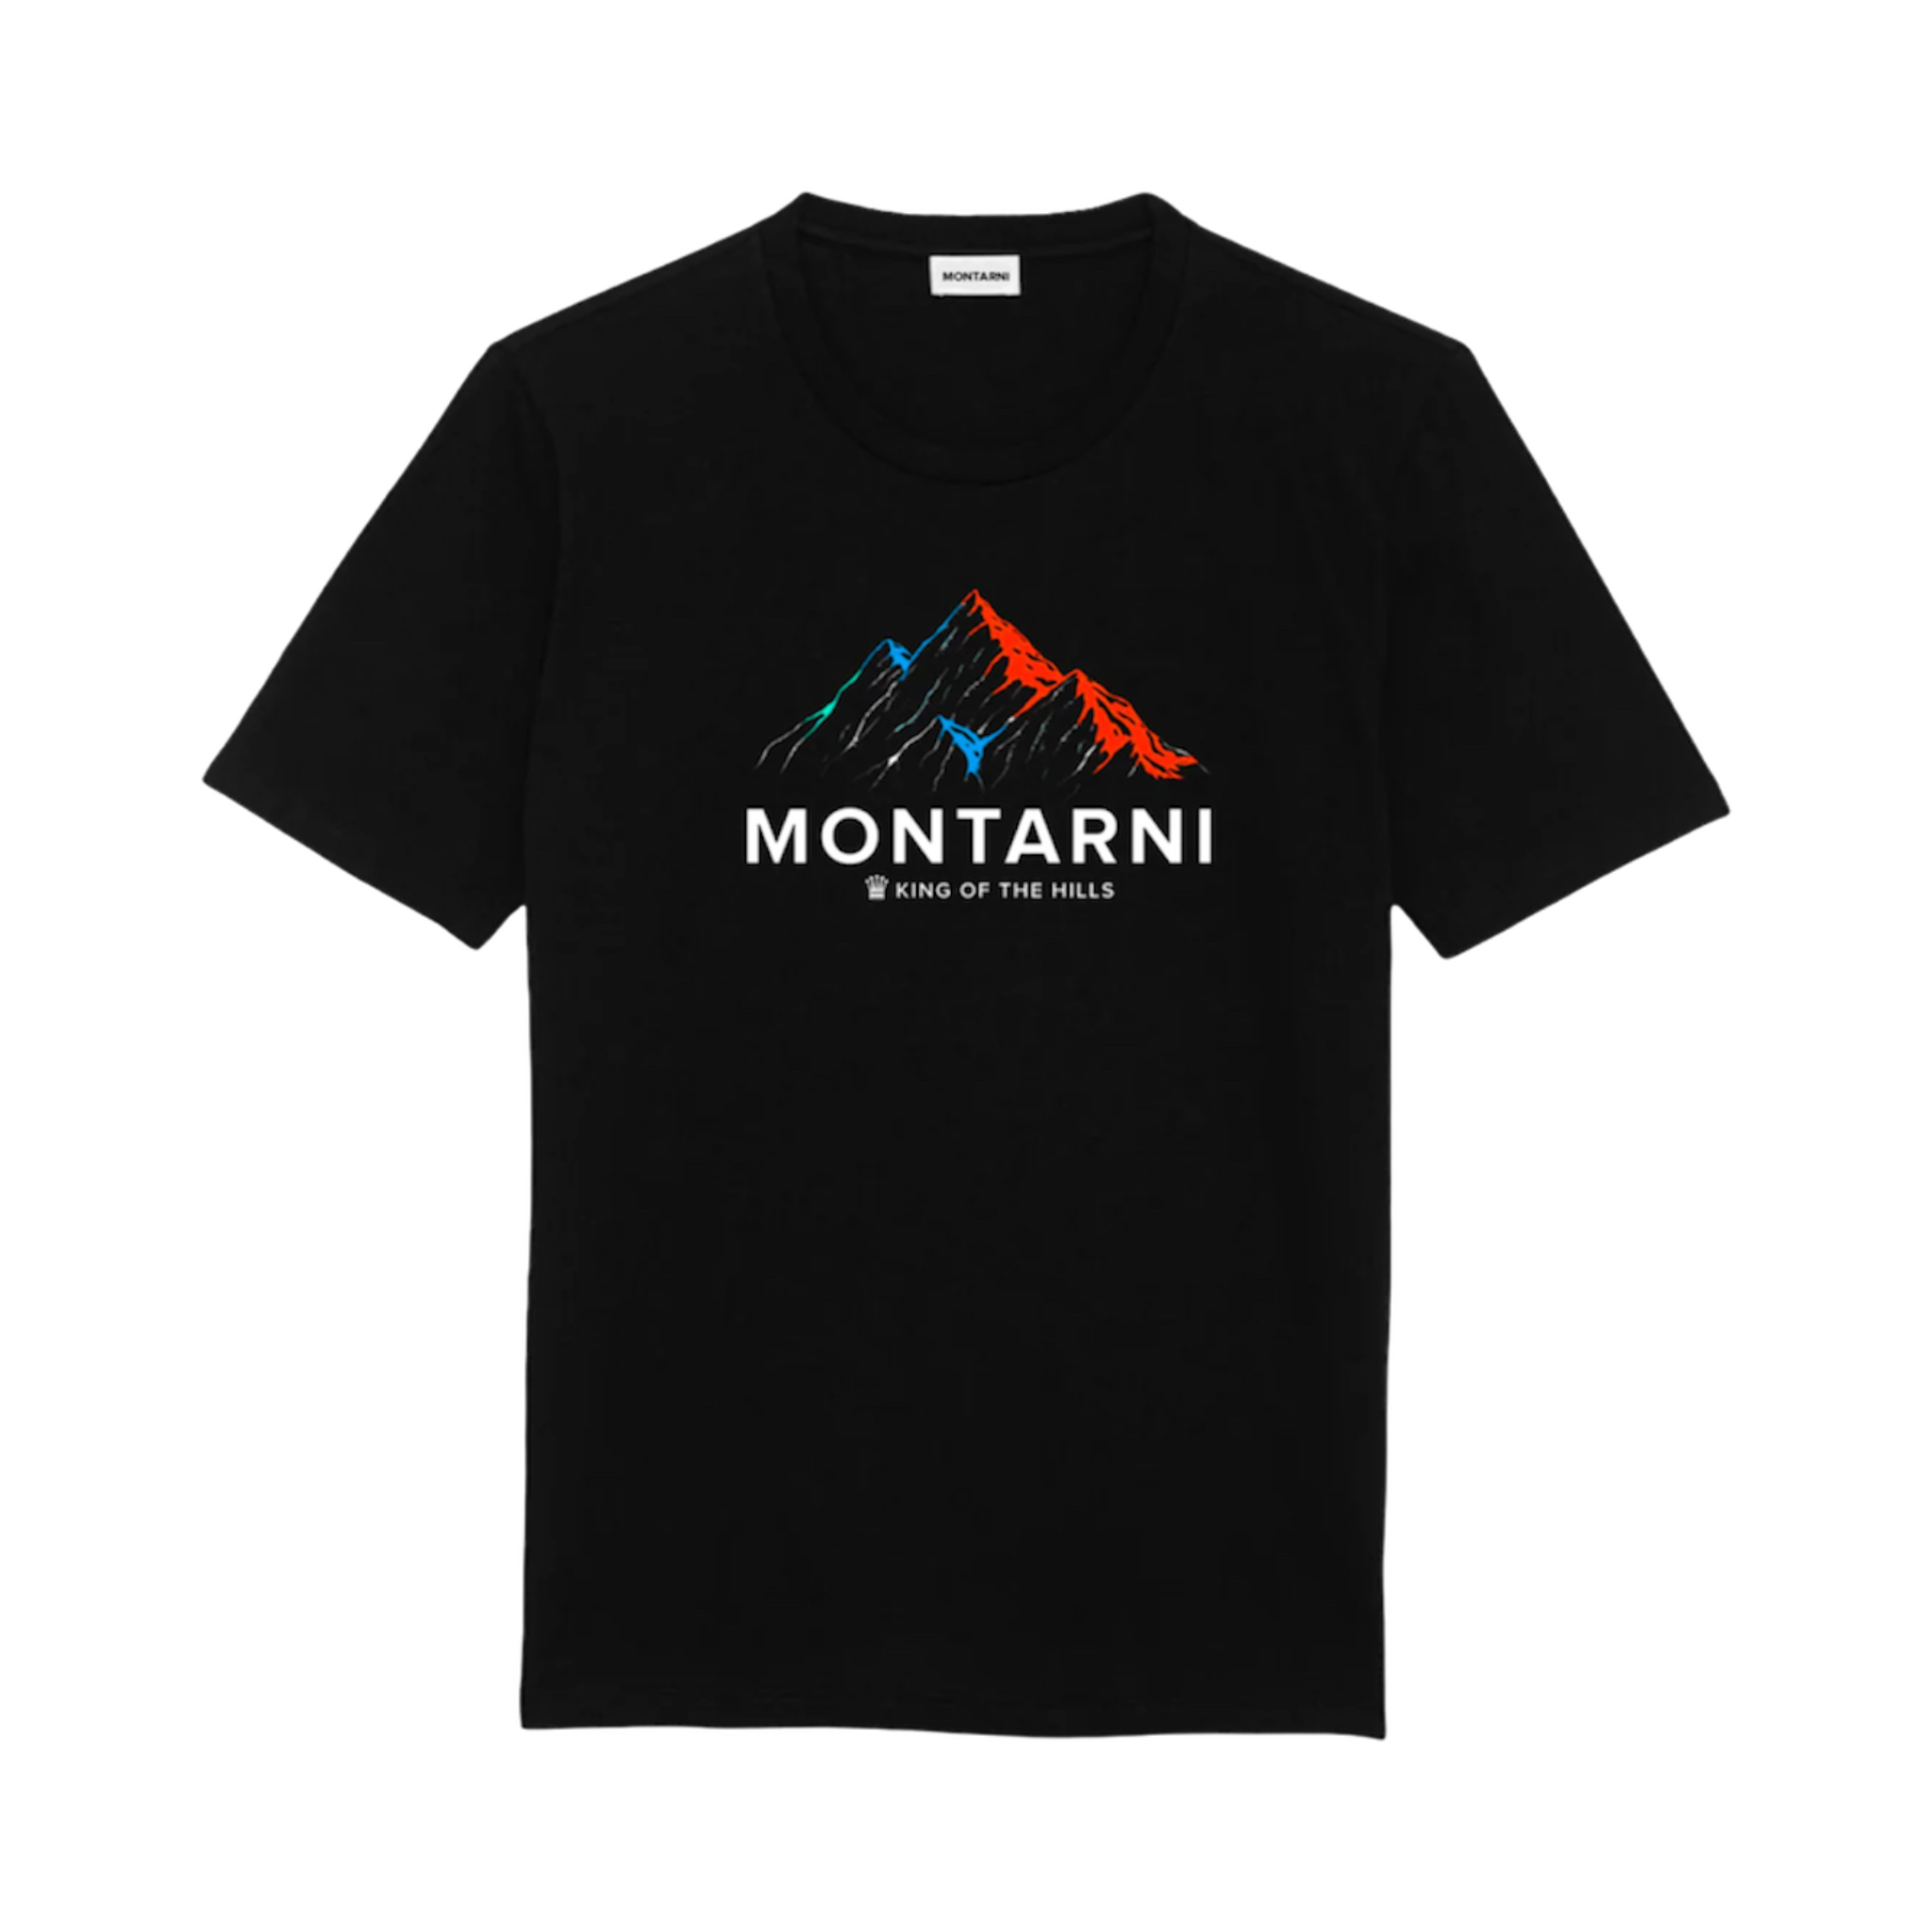 MONTARNI - King Of The Hills 100 cotton t shirt